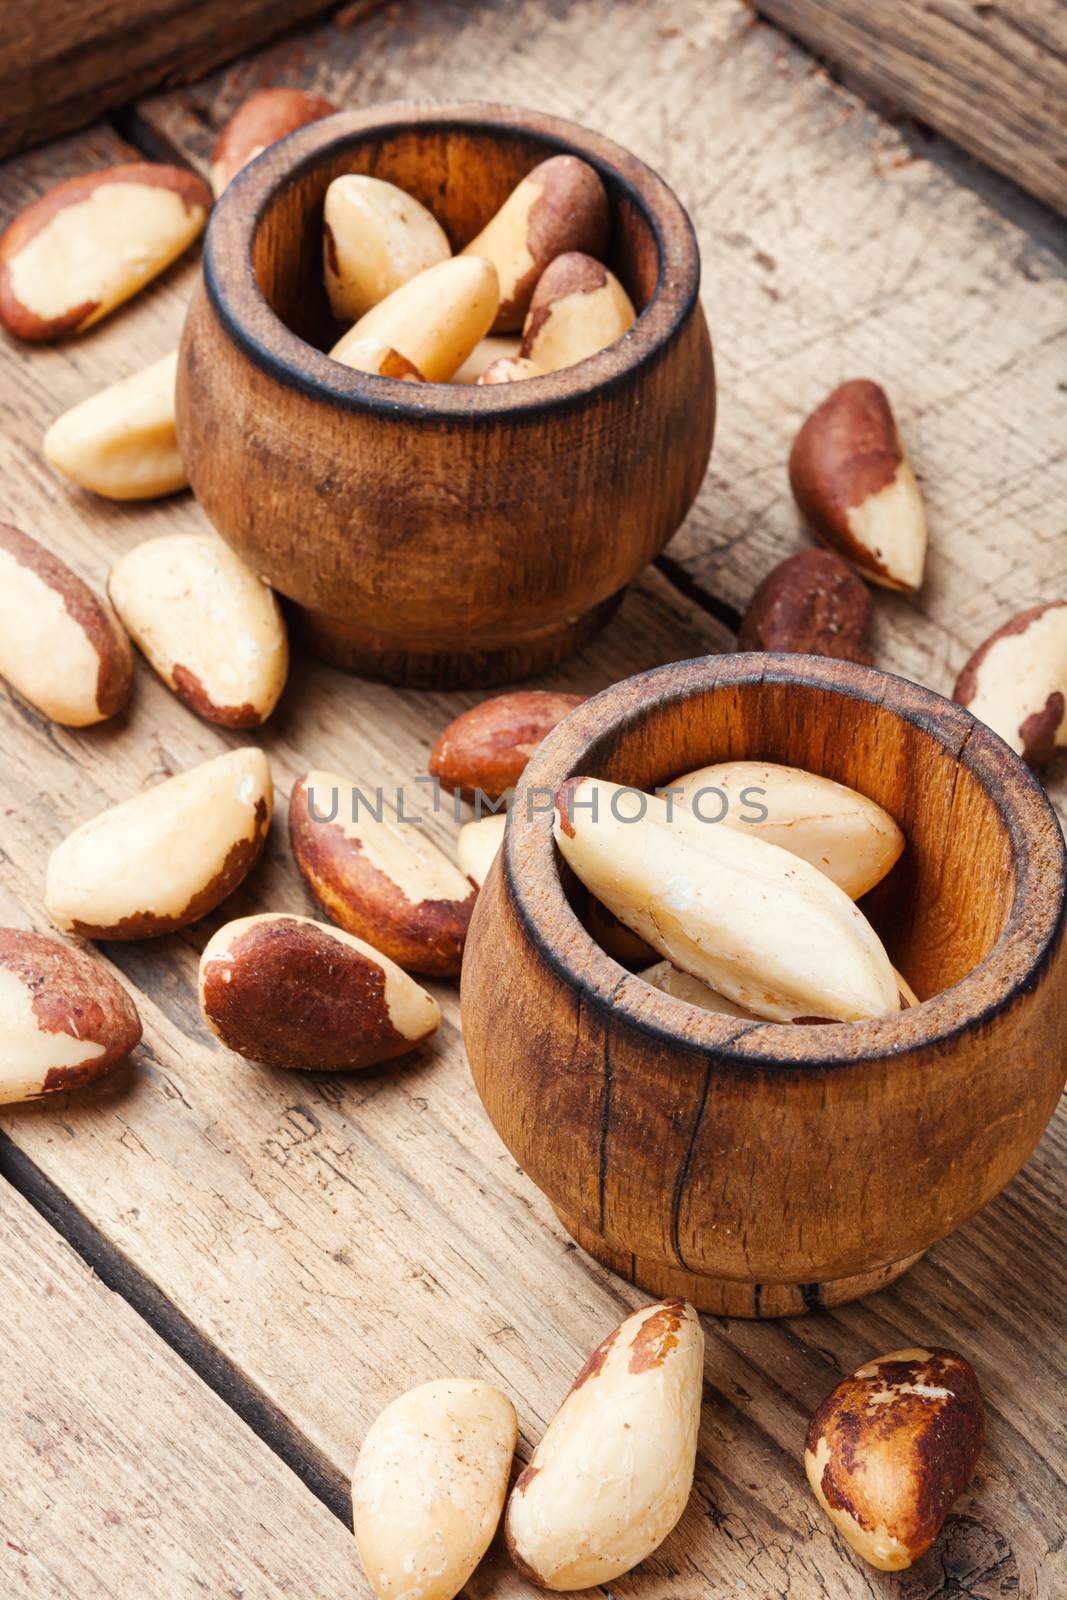 Brazil nut or Bertholletia by LMykola